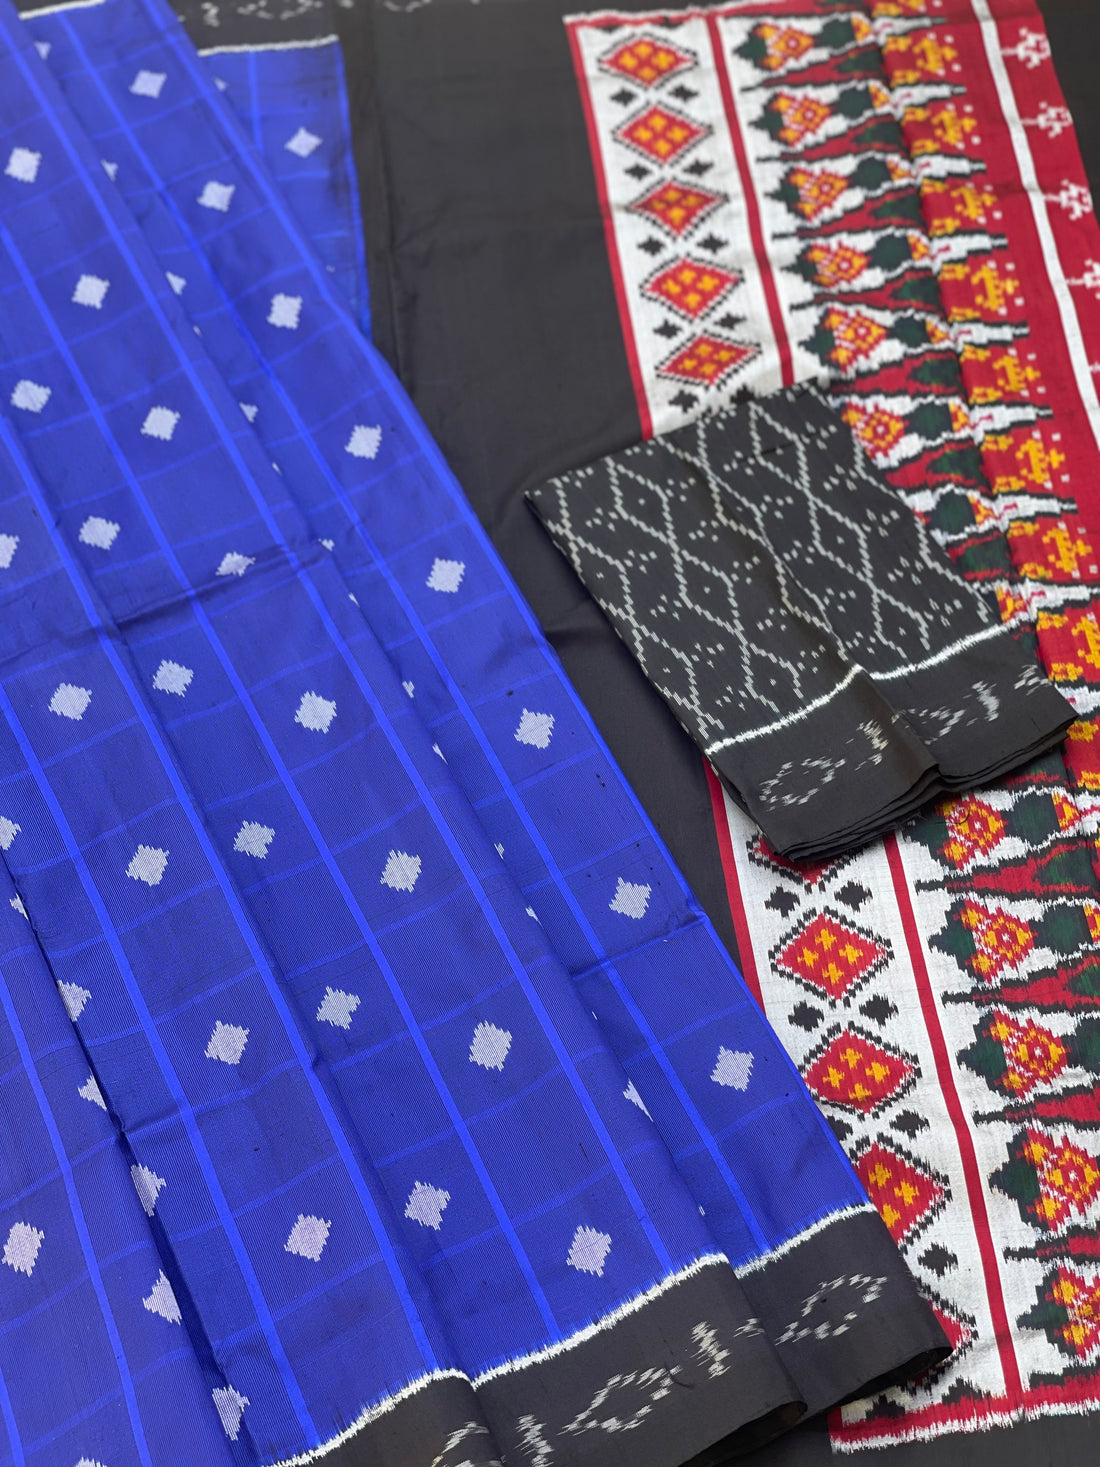 Contemporary Silk Ikkat Saree in Royal Blue shade